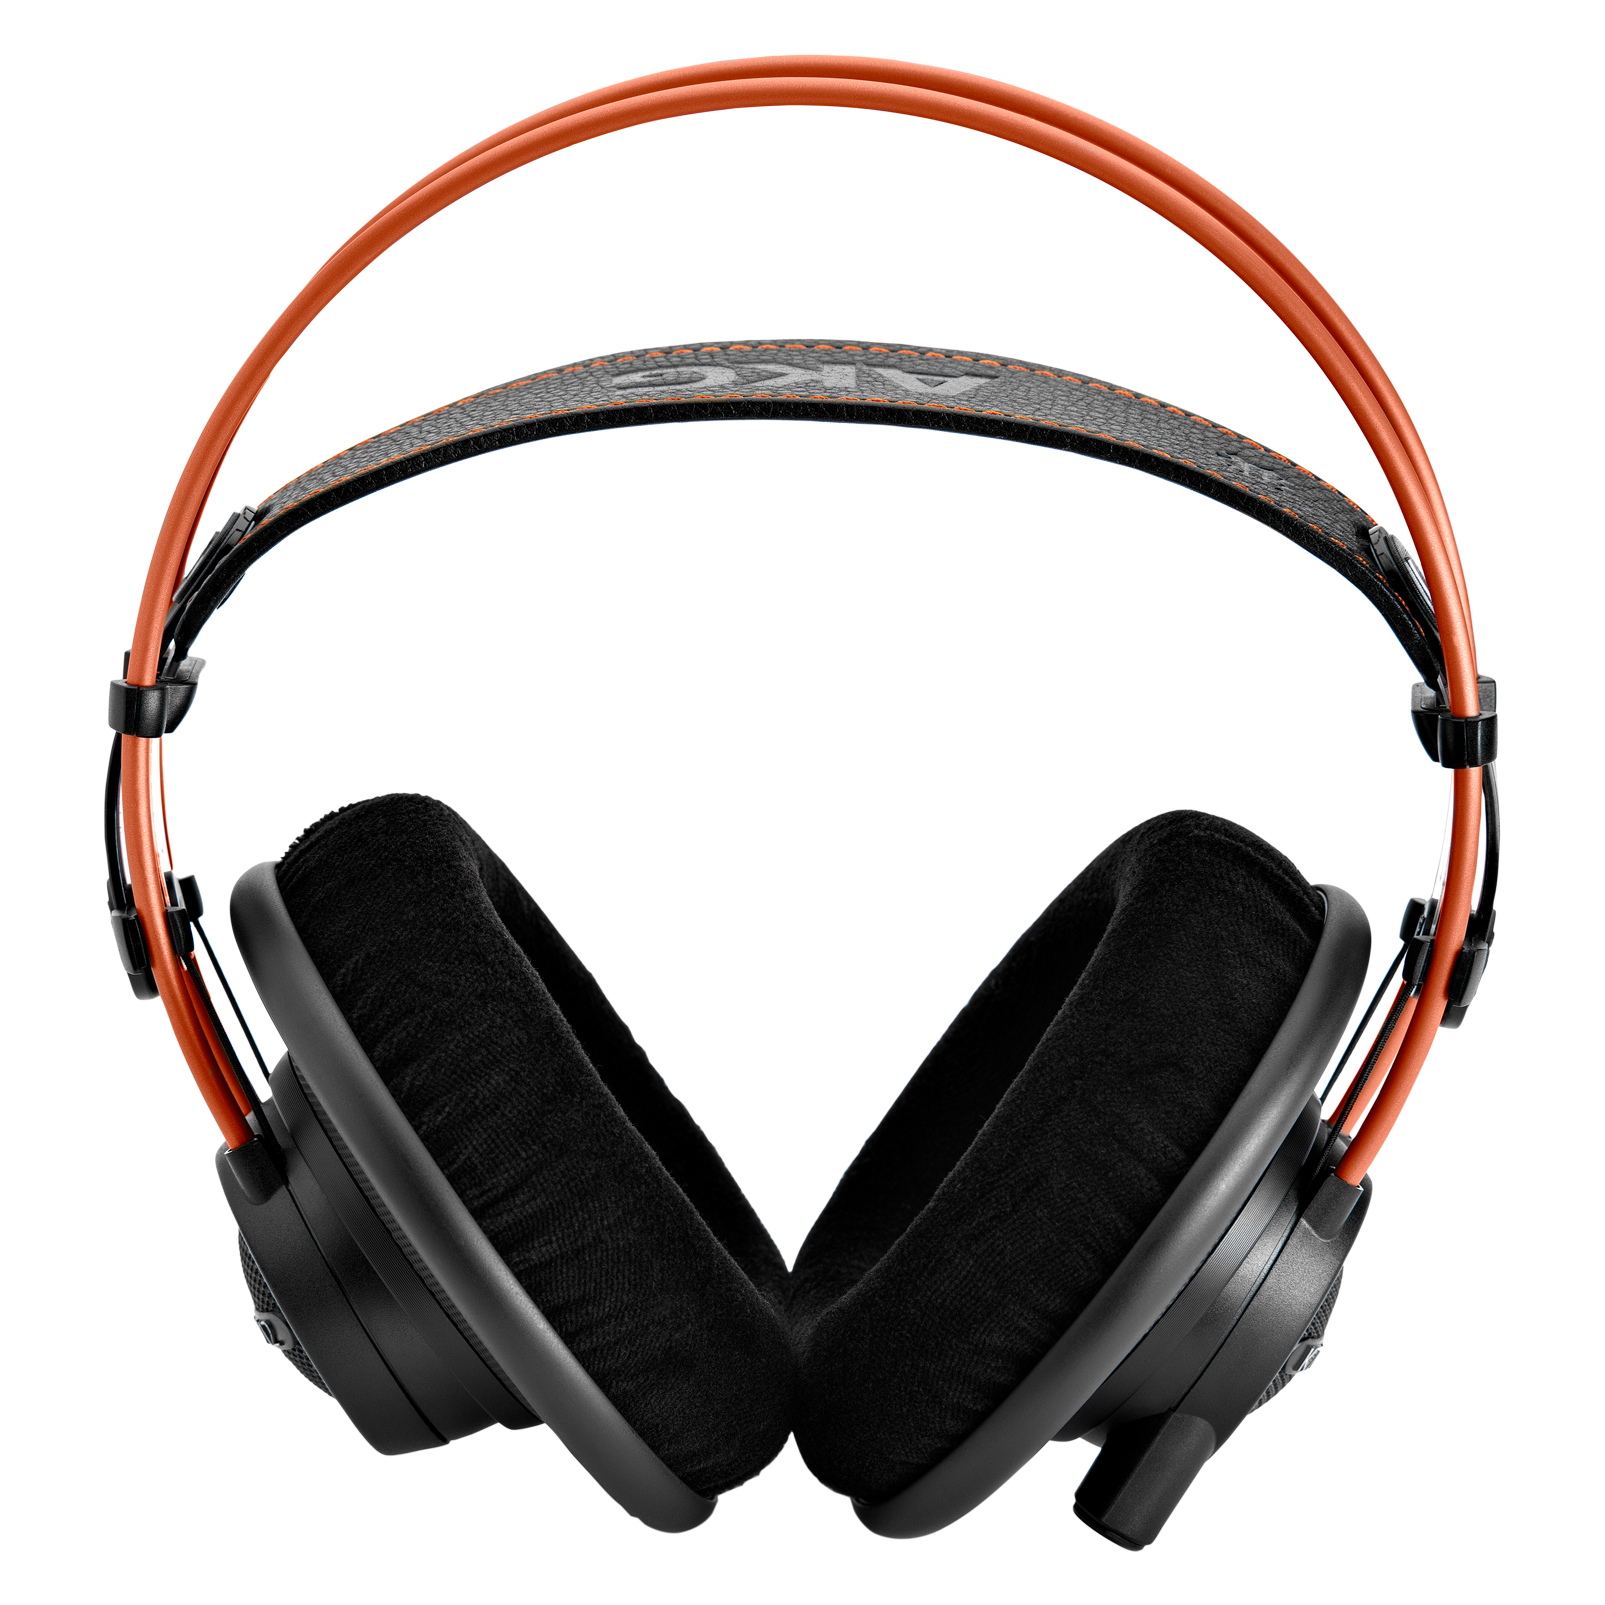 K712 PRO (B-Stock) - Black - Reference studio headphones - Front